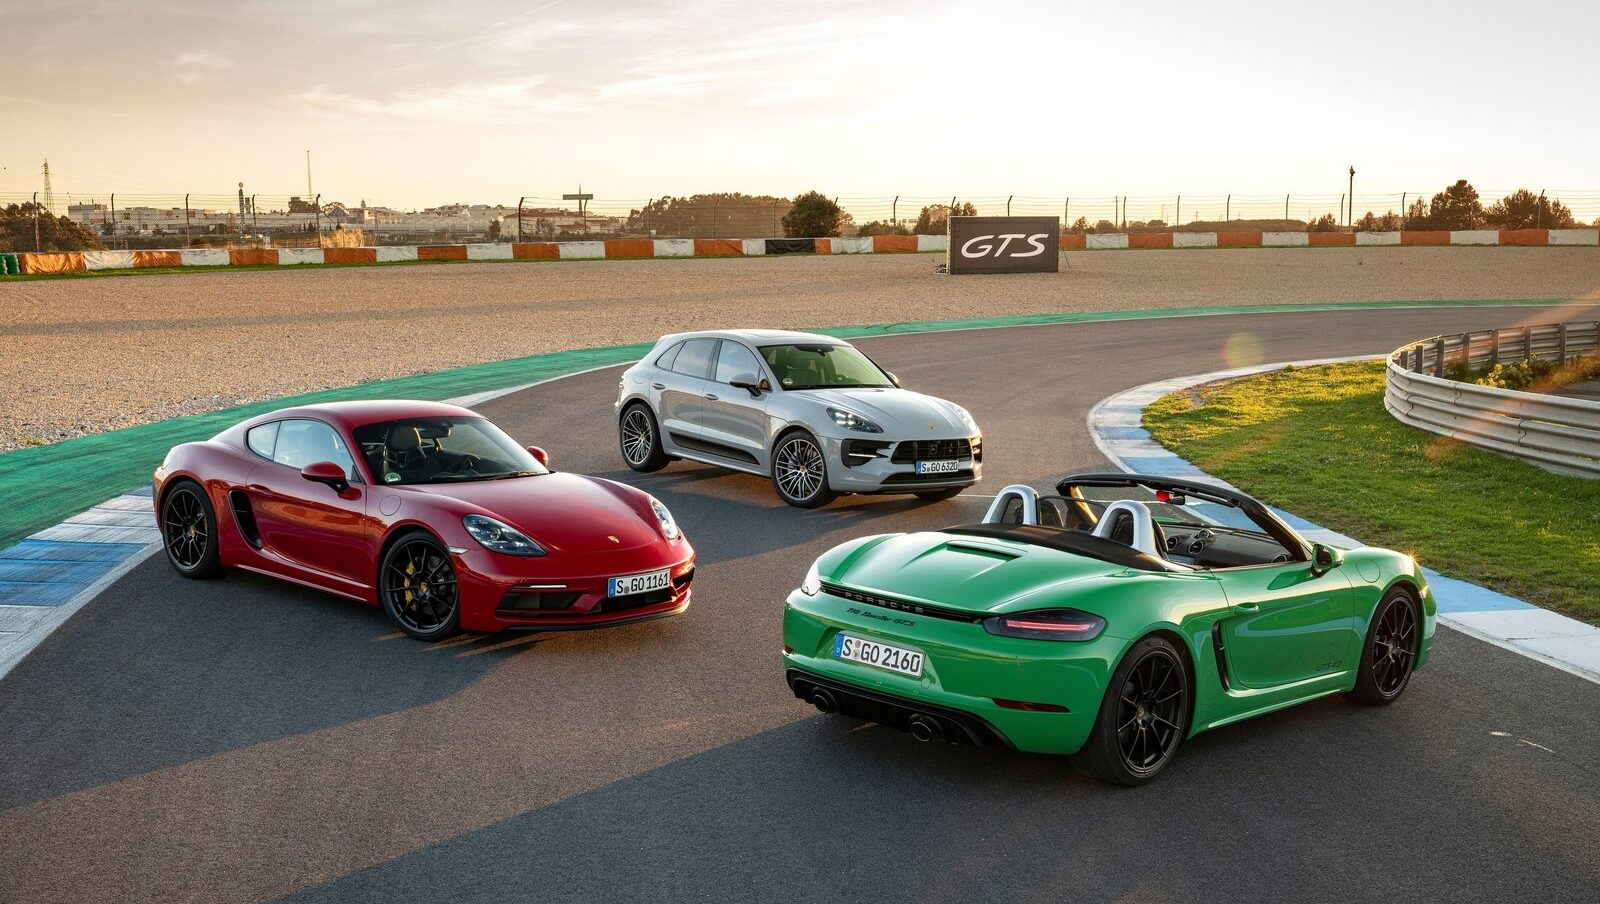 Porsche снимет с производства бензиновые Macan, Boxster и Cayman